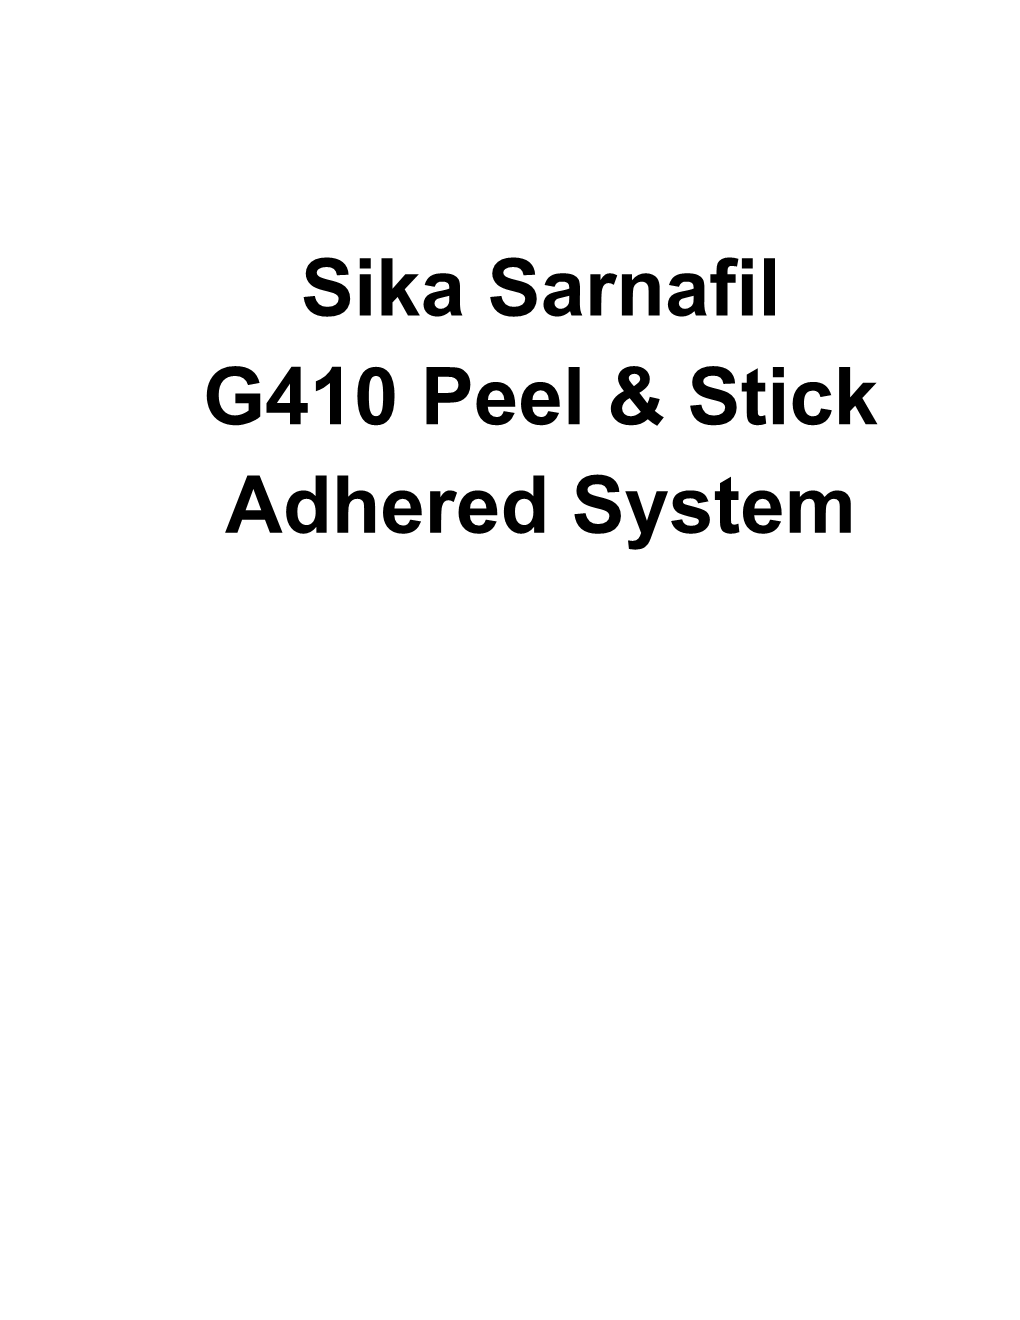 Sarnafil Peel & Stick Guide Specification